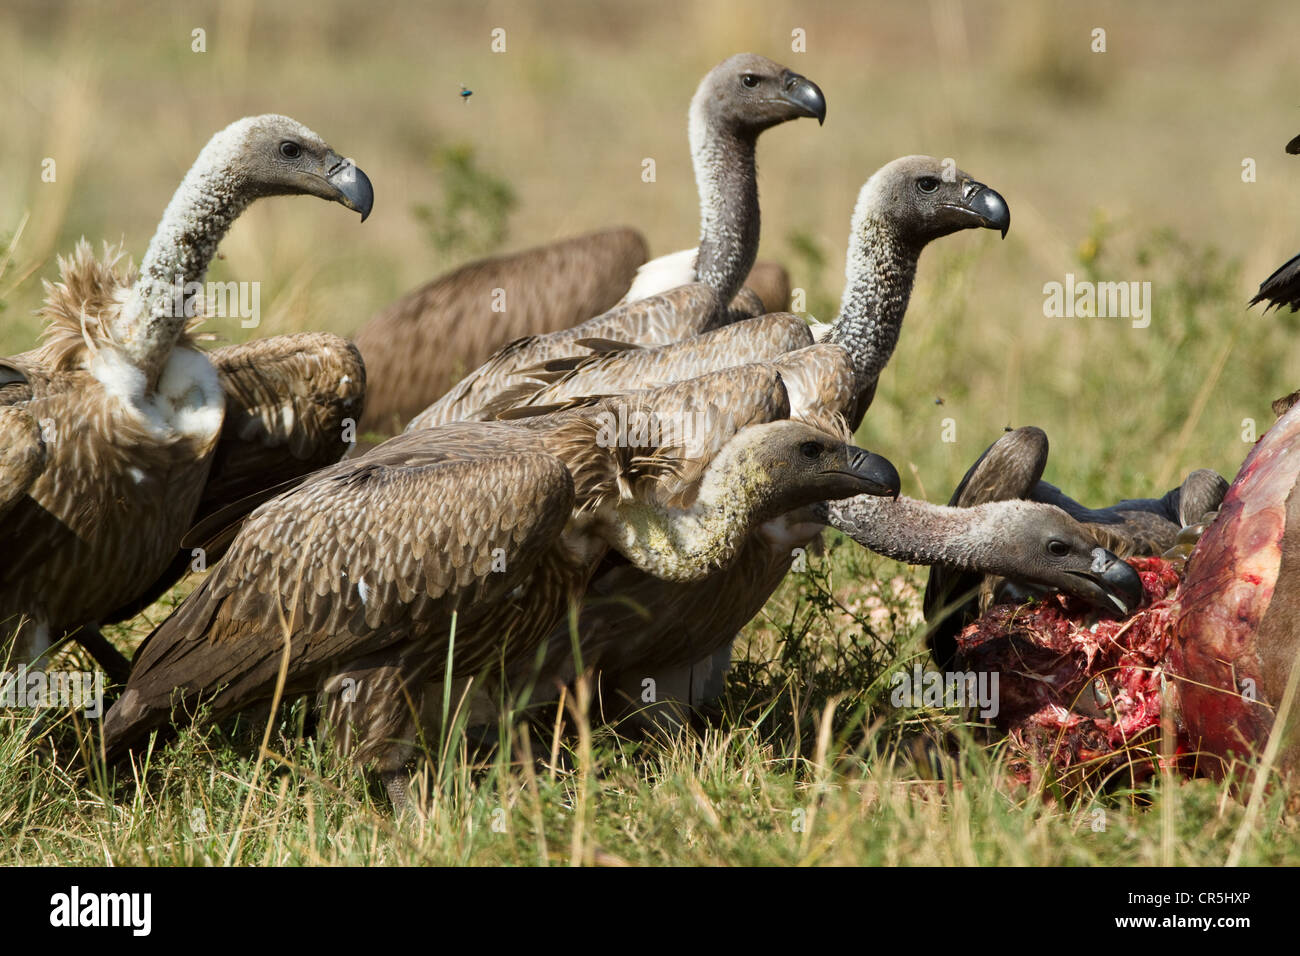 Kenya, Masai Mara National Reserve, vultures eating Stock Photo